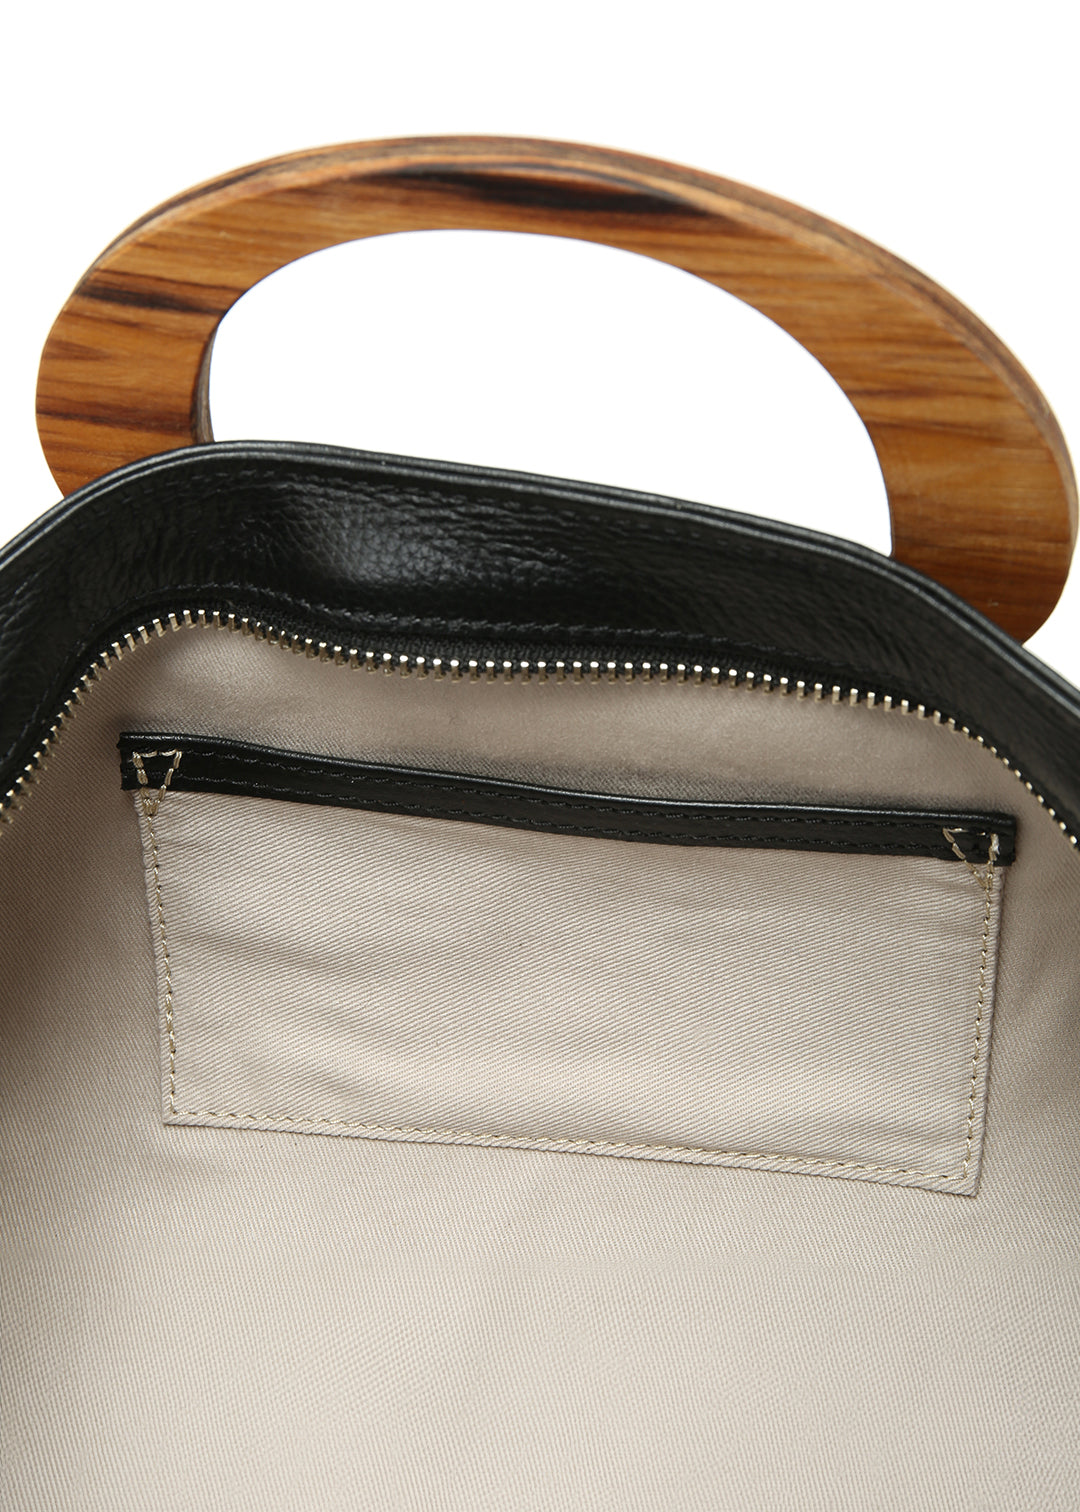 Wood Handle Bag (leather)